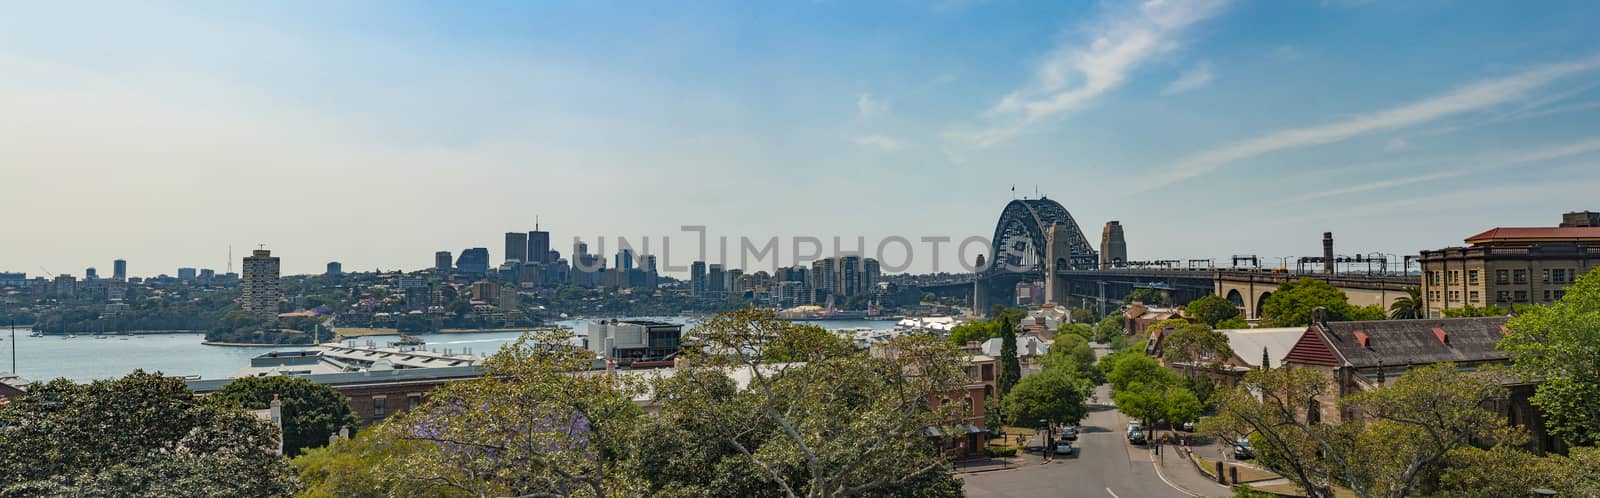 Panoramic photo of Sydney skyline with Harbour Bridge seen from Sydney Observatory area, Australia